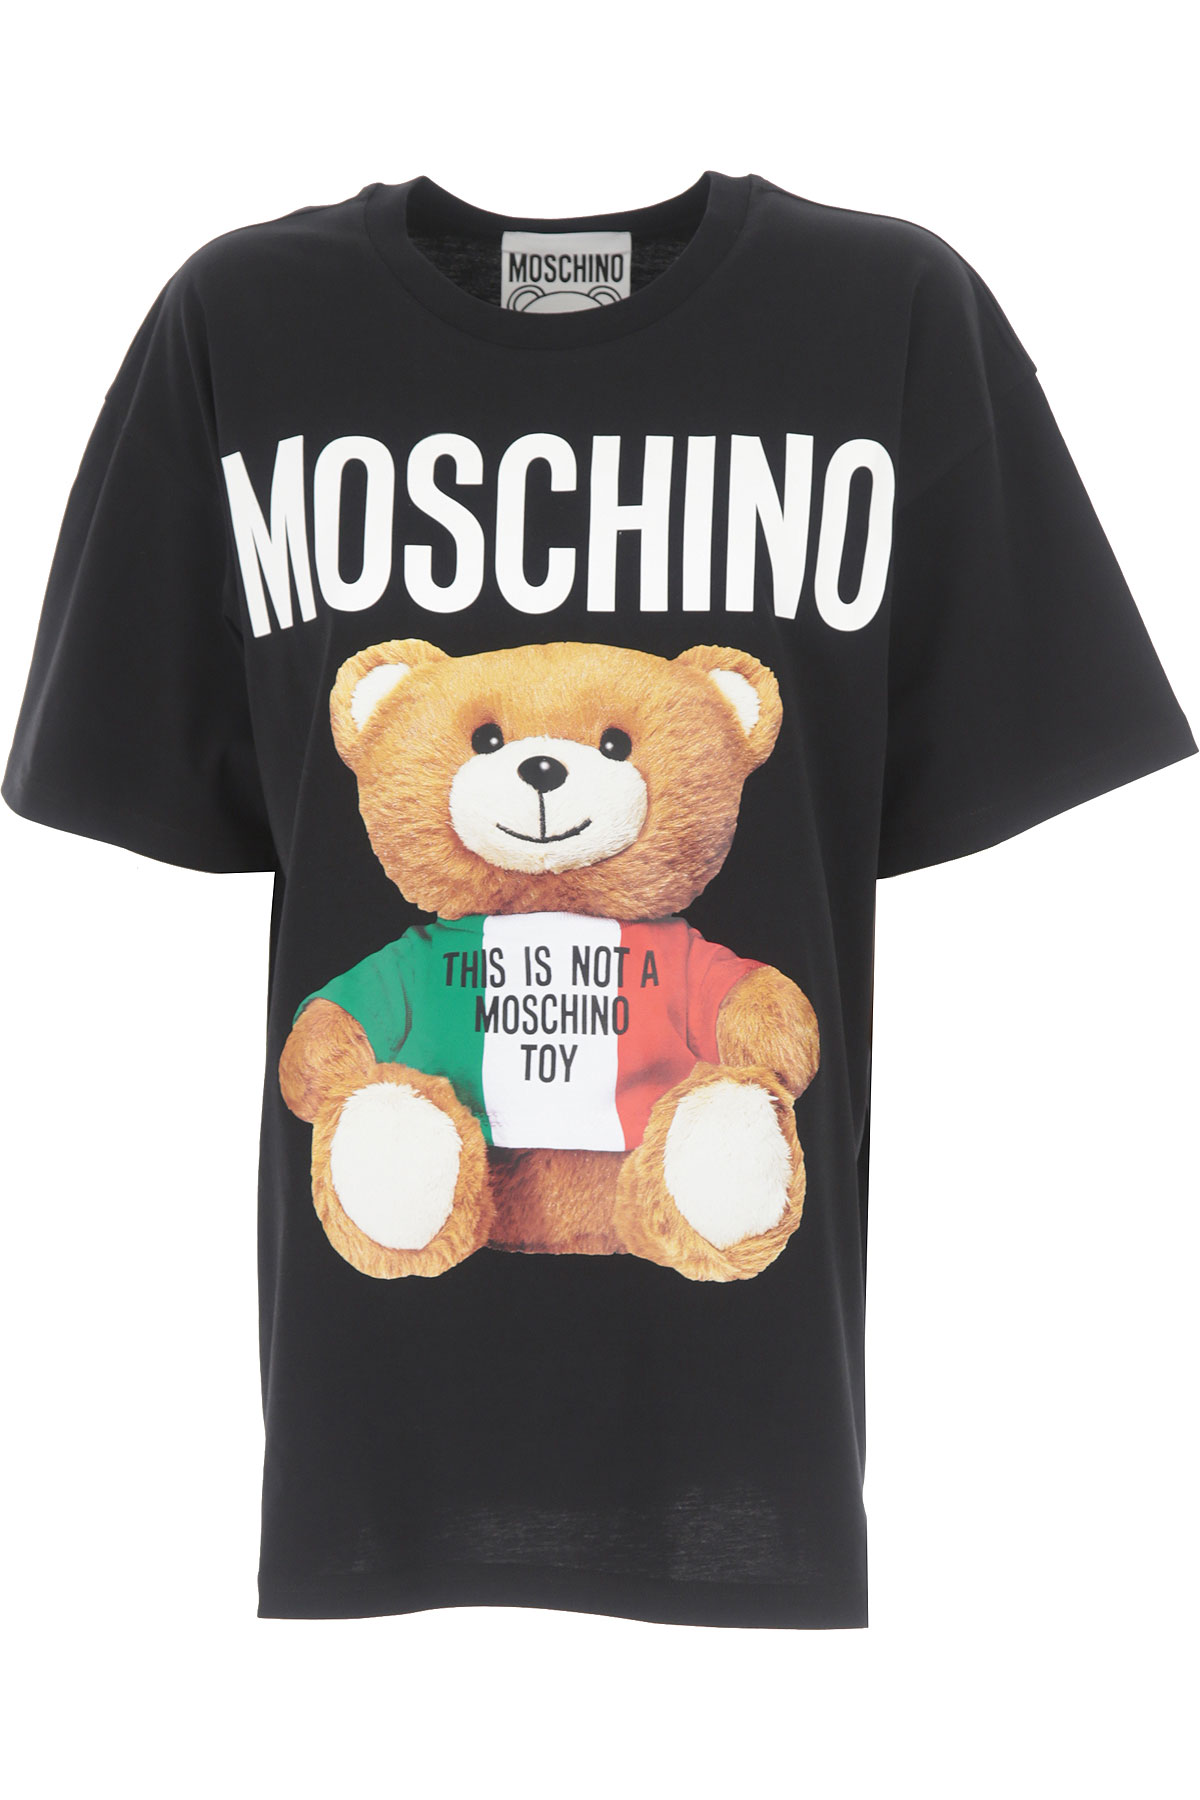 Москино одежда. Moschino одежда женская. Футболка в стиле Moschino. Moschino t0702 t-Shirt.